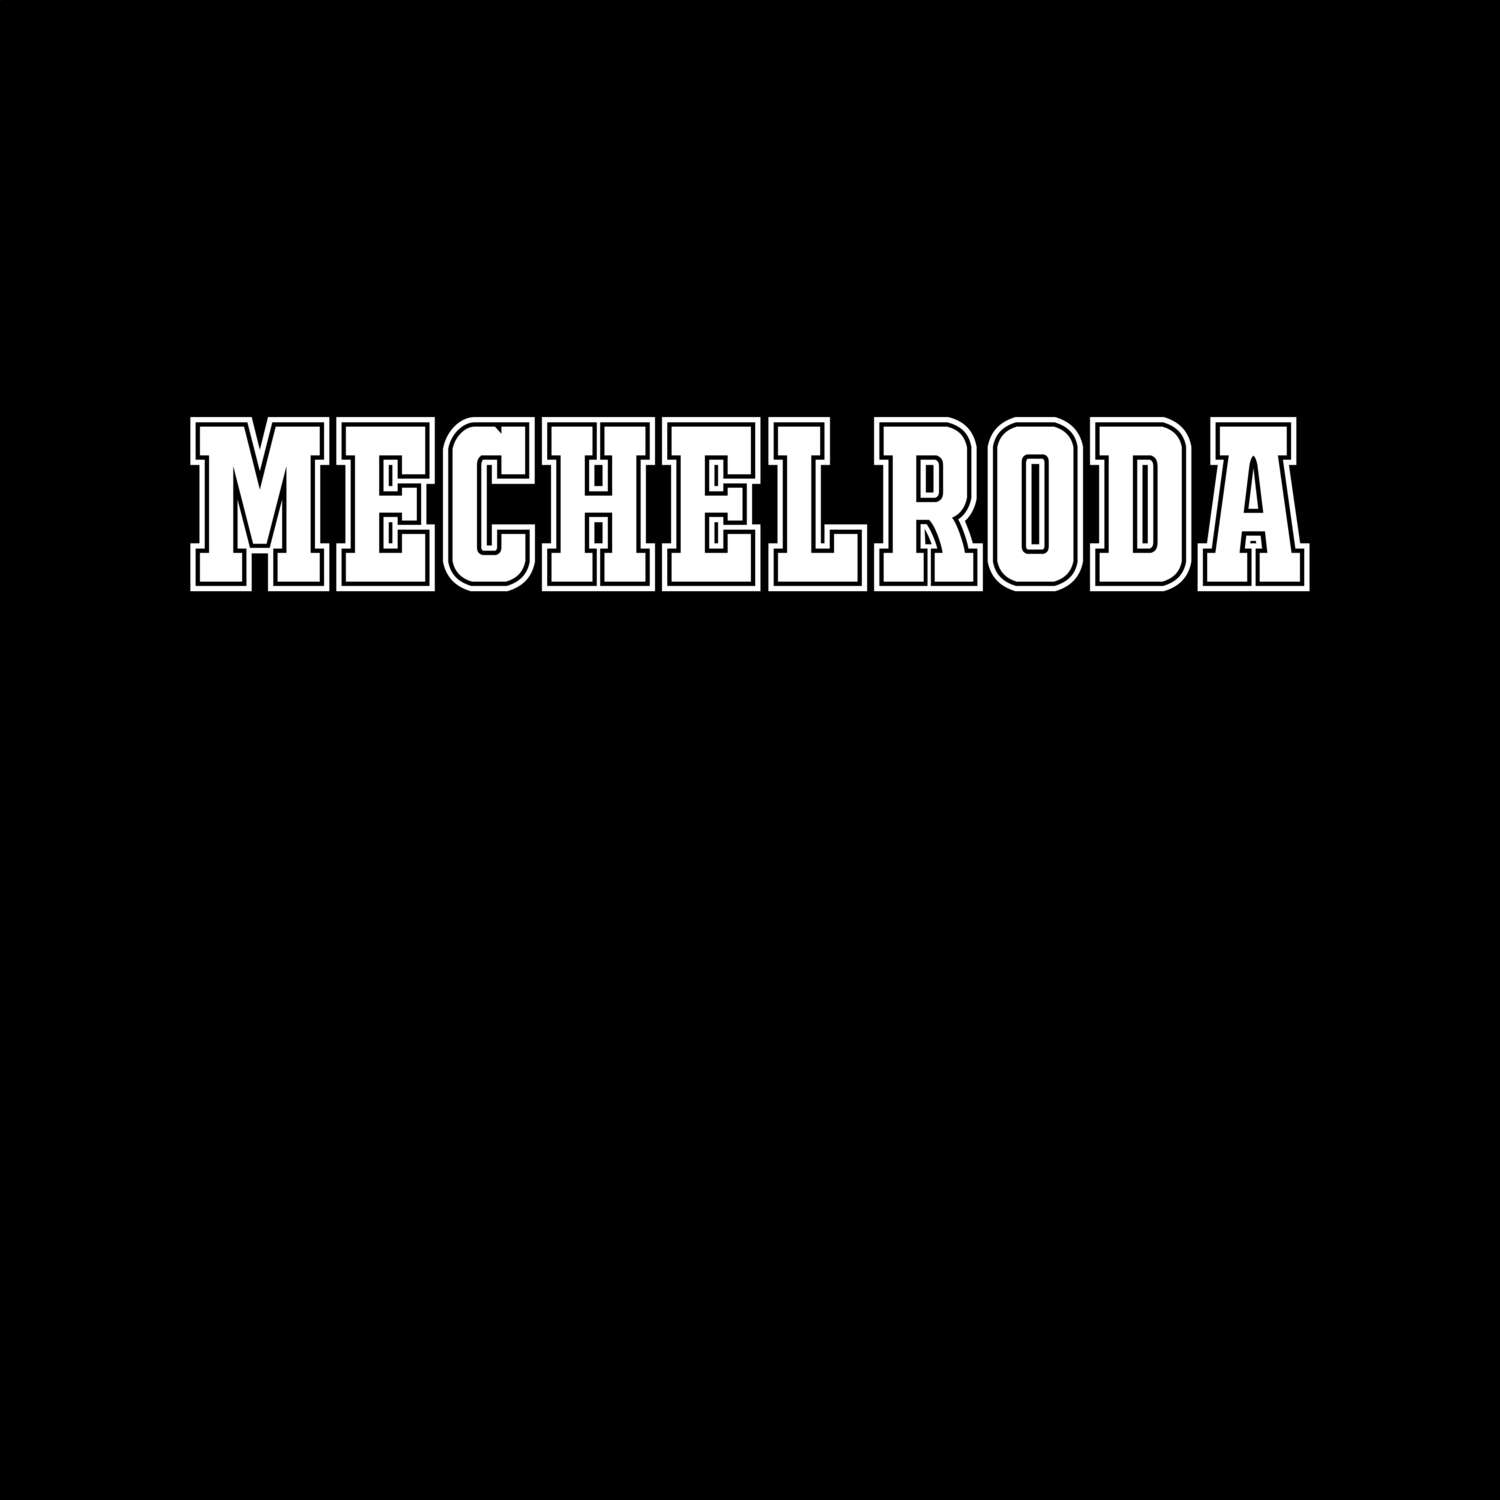 Mechelroda T-Shirt »Classic«